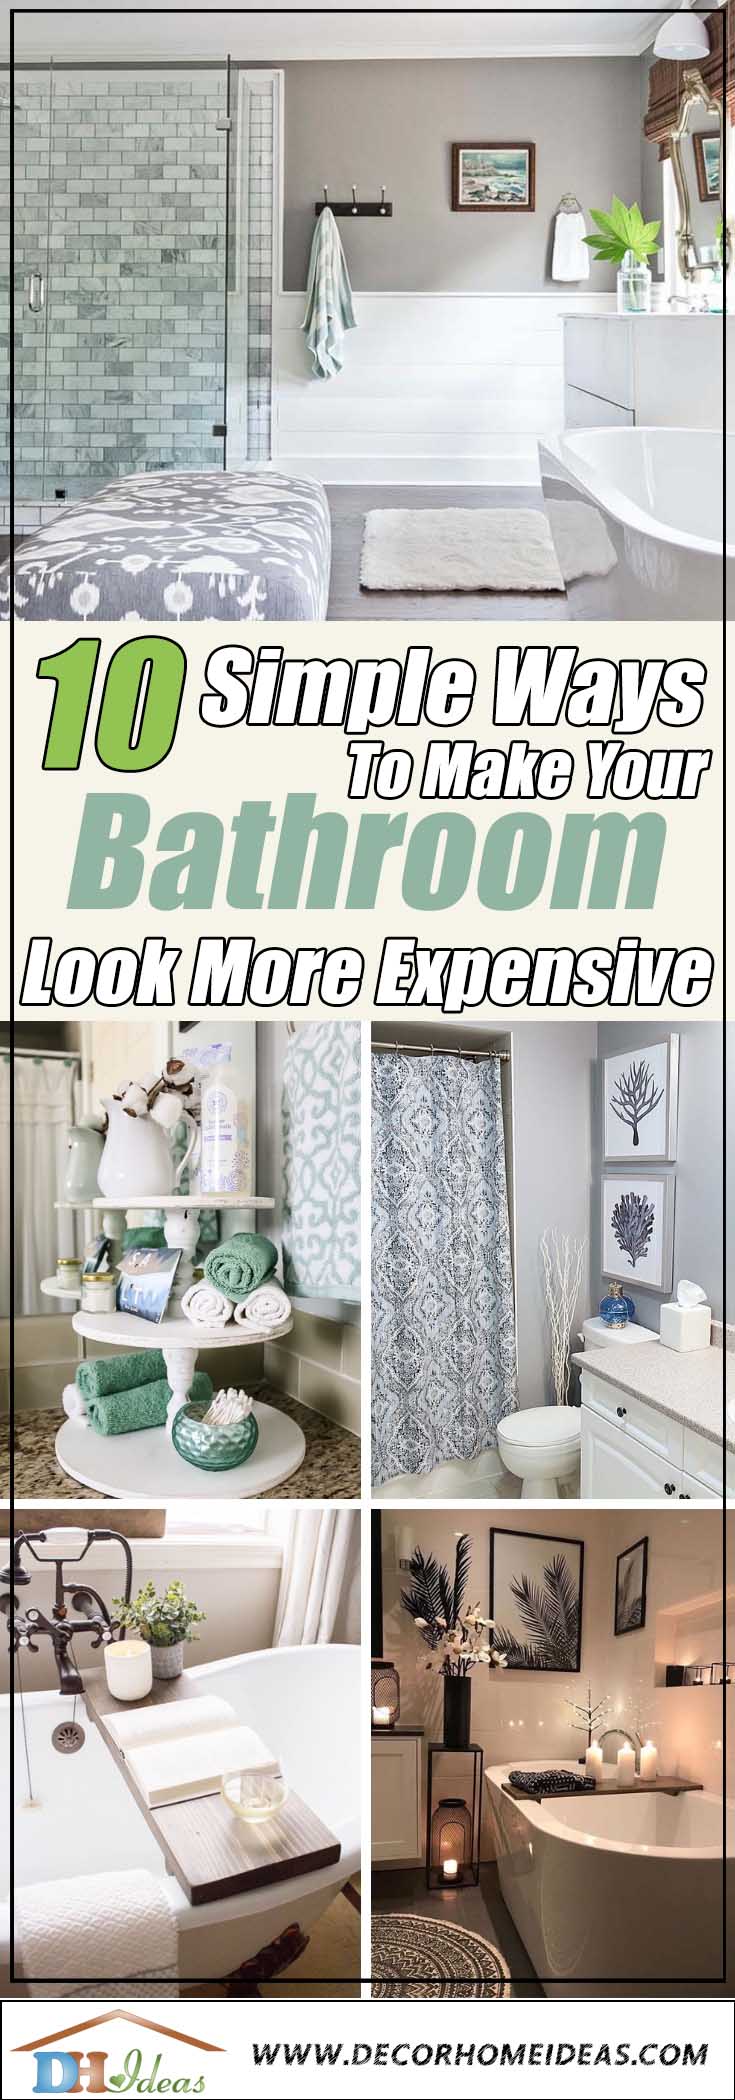 10 Simple Ways To Make Your Bathroom Look More Expensive #bathroom #expensive #decor #decorhomeideas